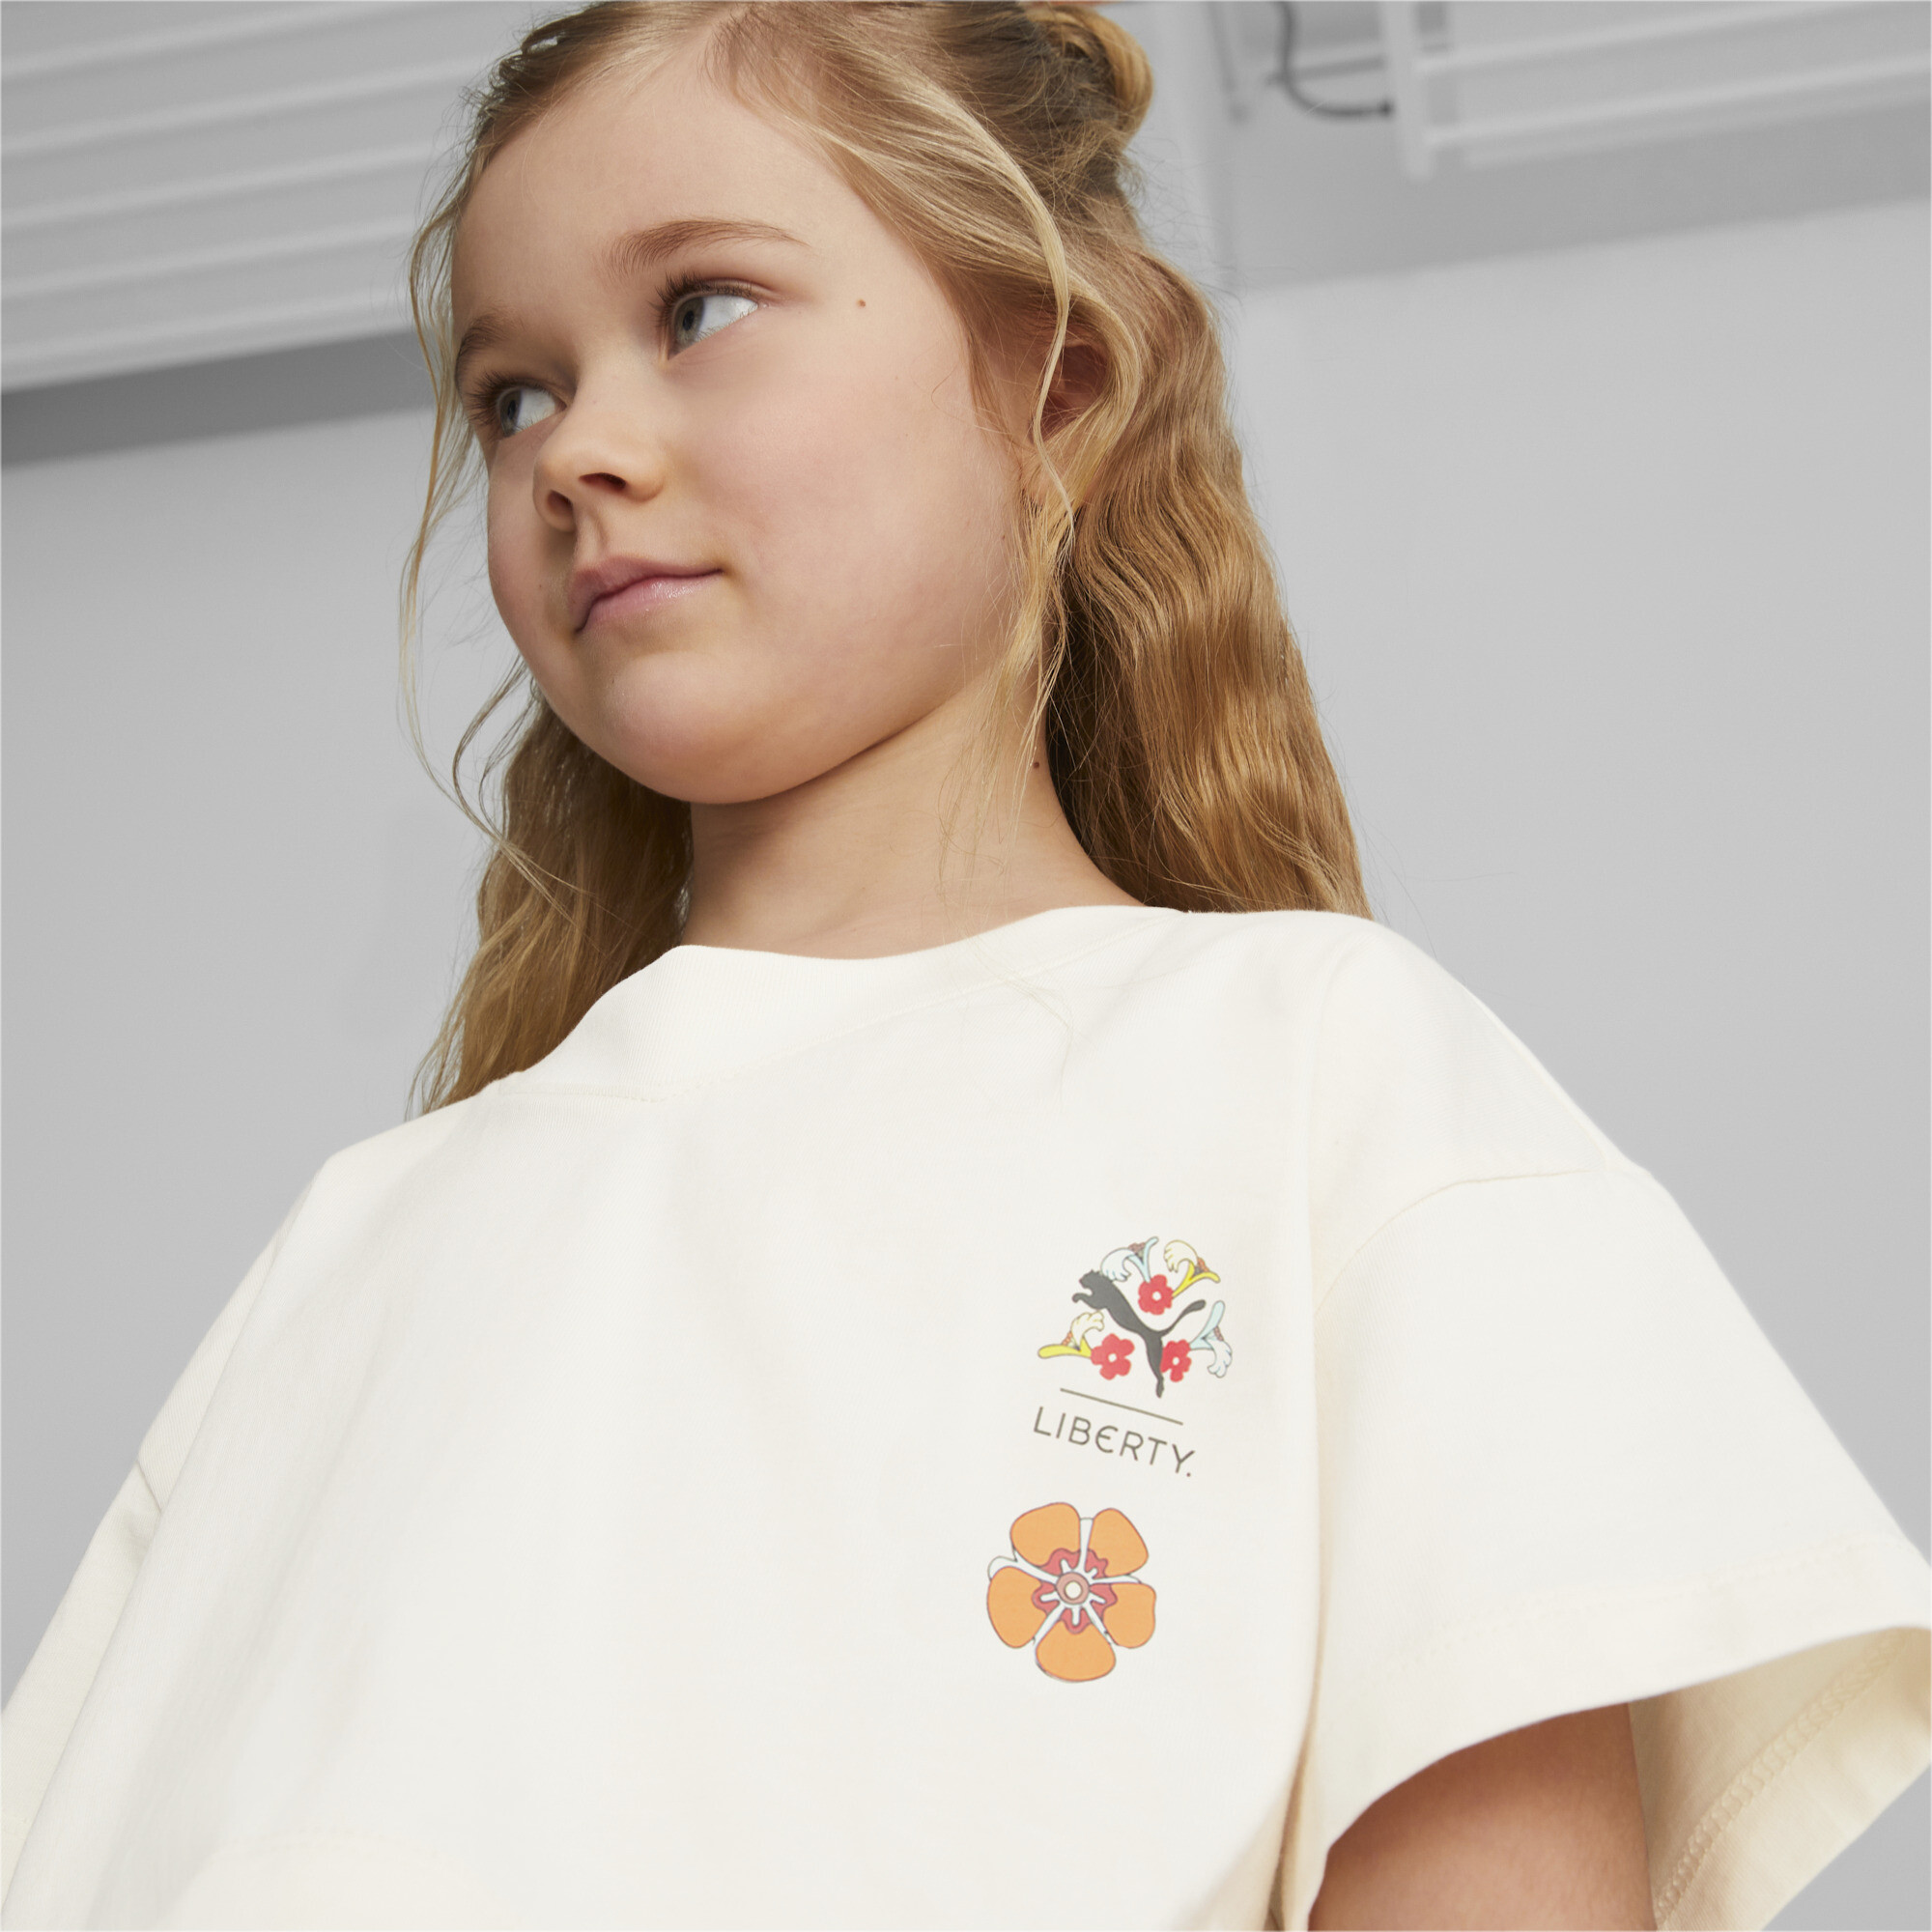 PUMA X LIBERTY T-Shirt Kids In White, Size 7-8 Youth